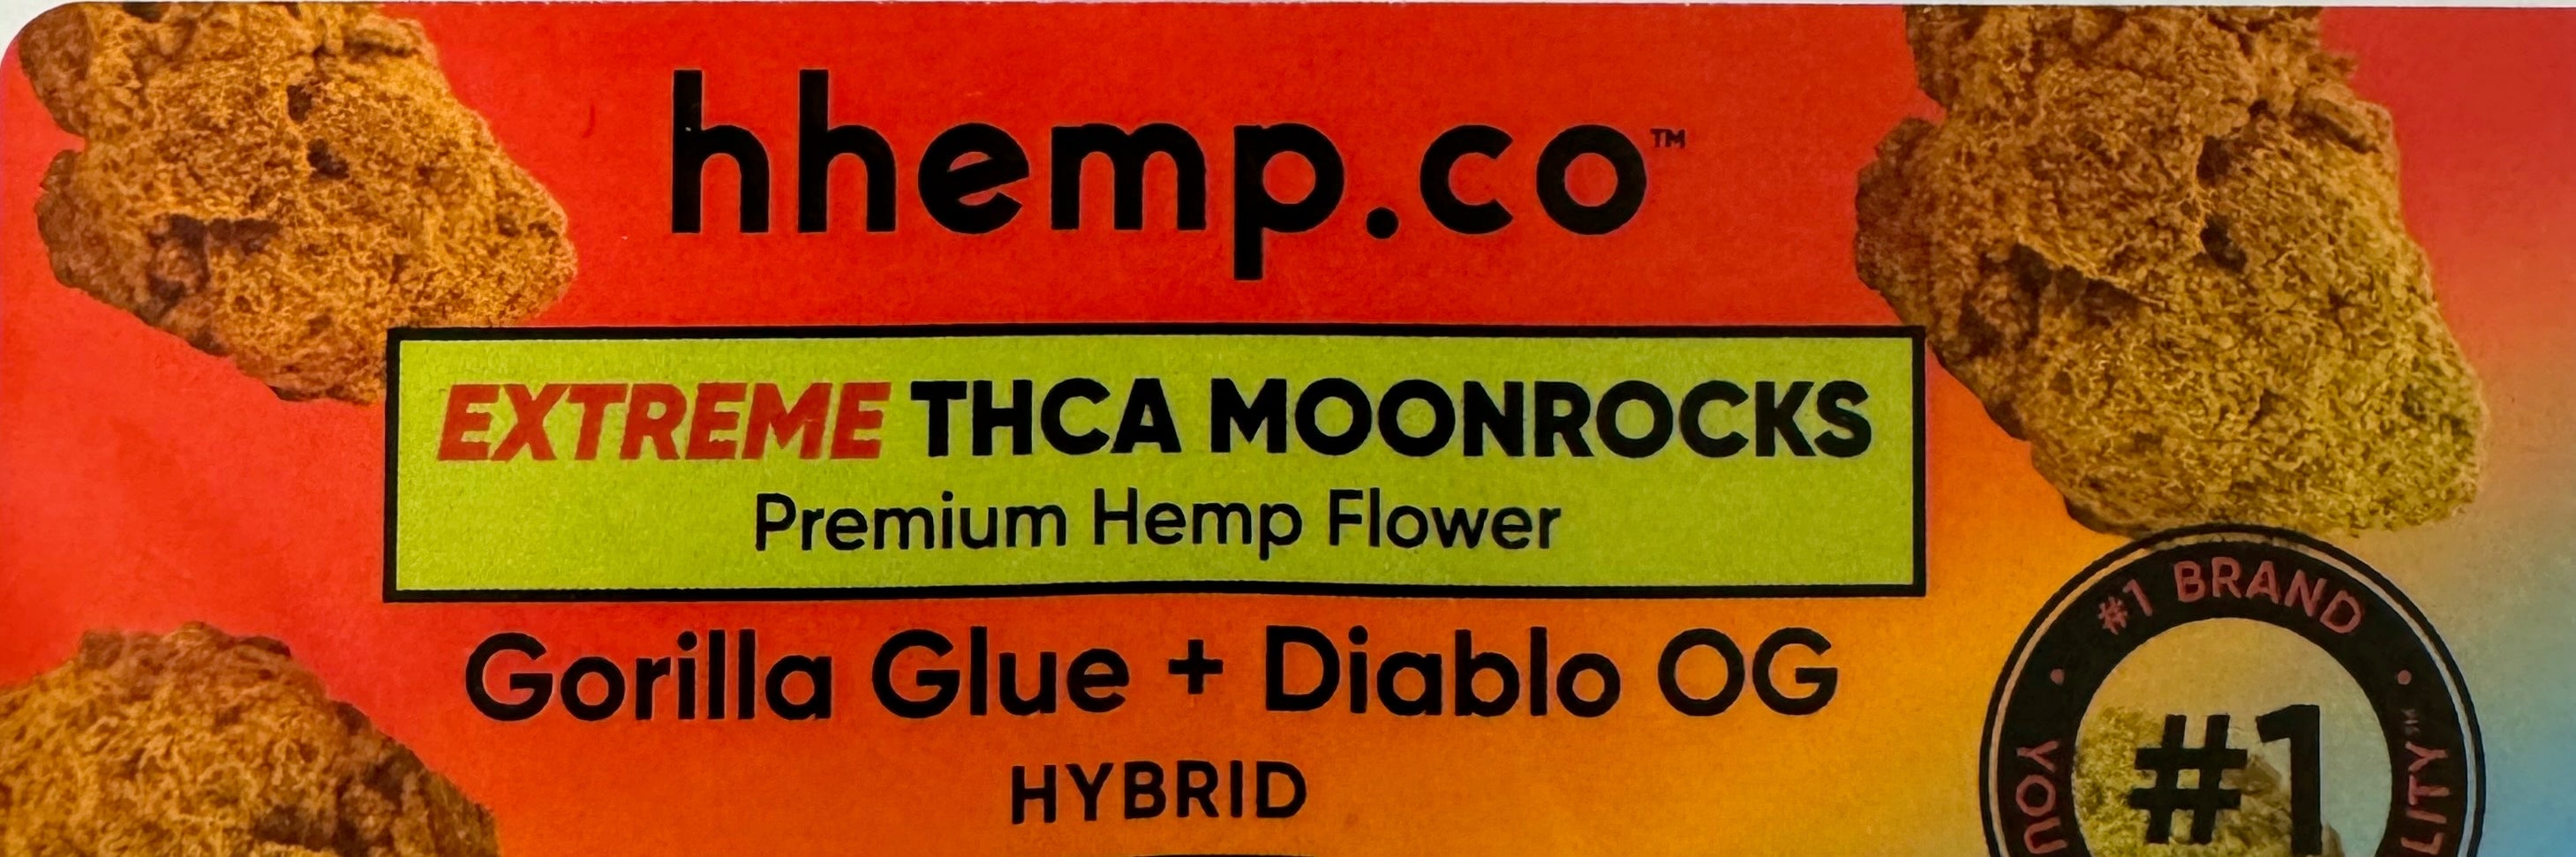 Extreme THCA Moonrocks Hemp Flower 1/4, 1/2, 1lb - Unit